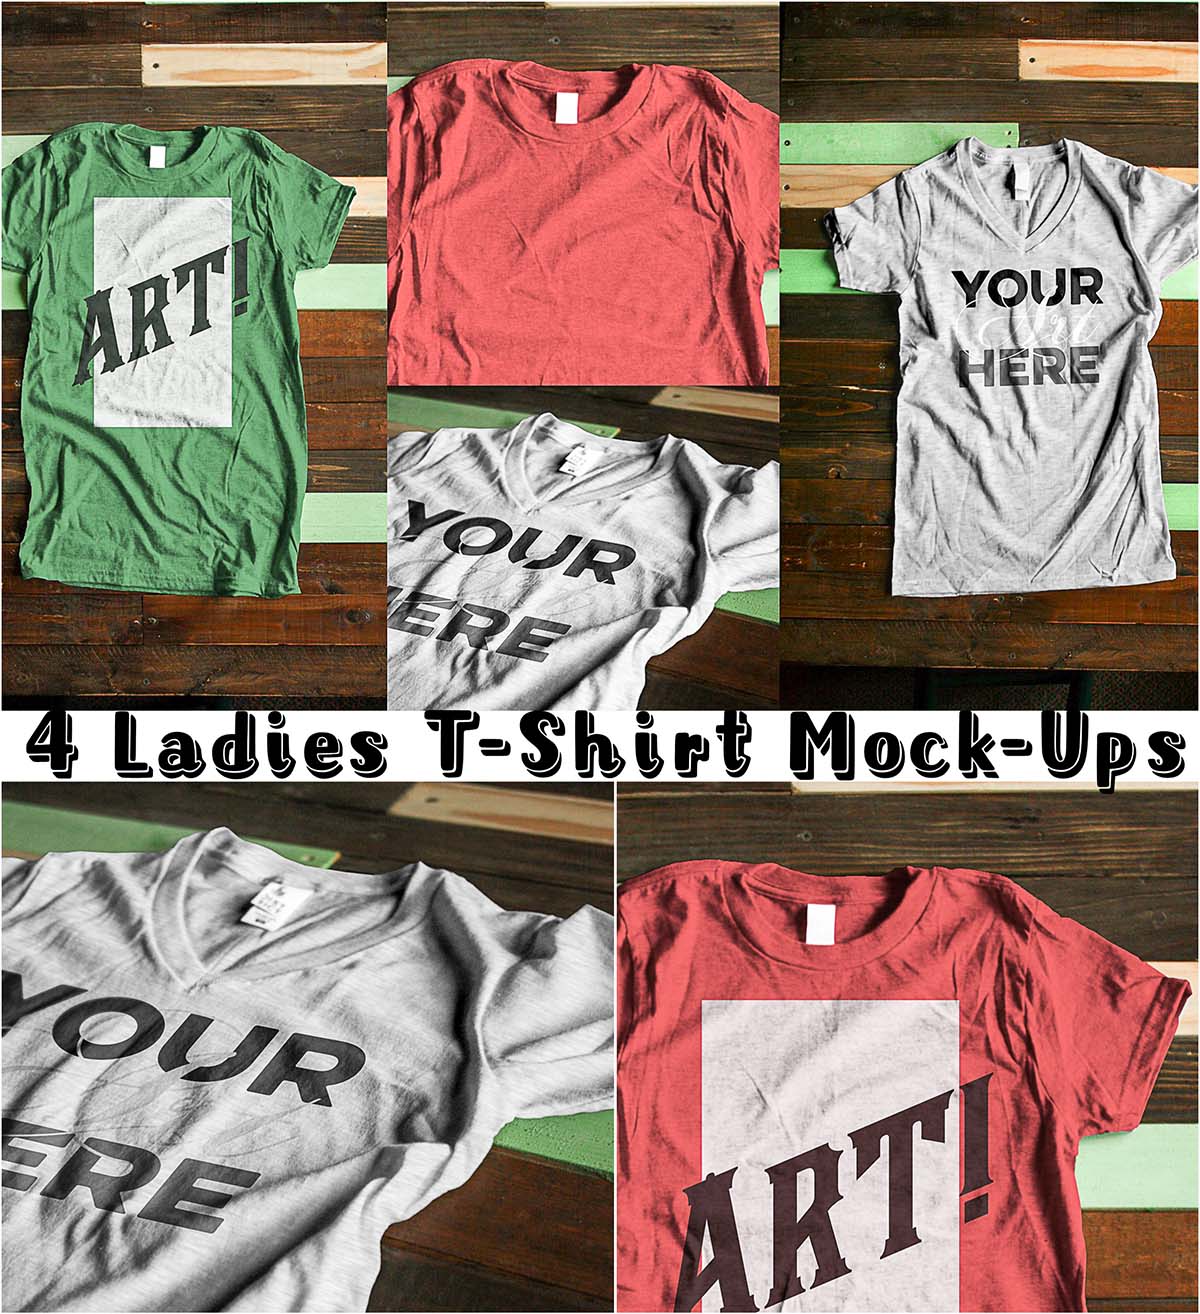 Ladies t-shirt mockup